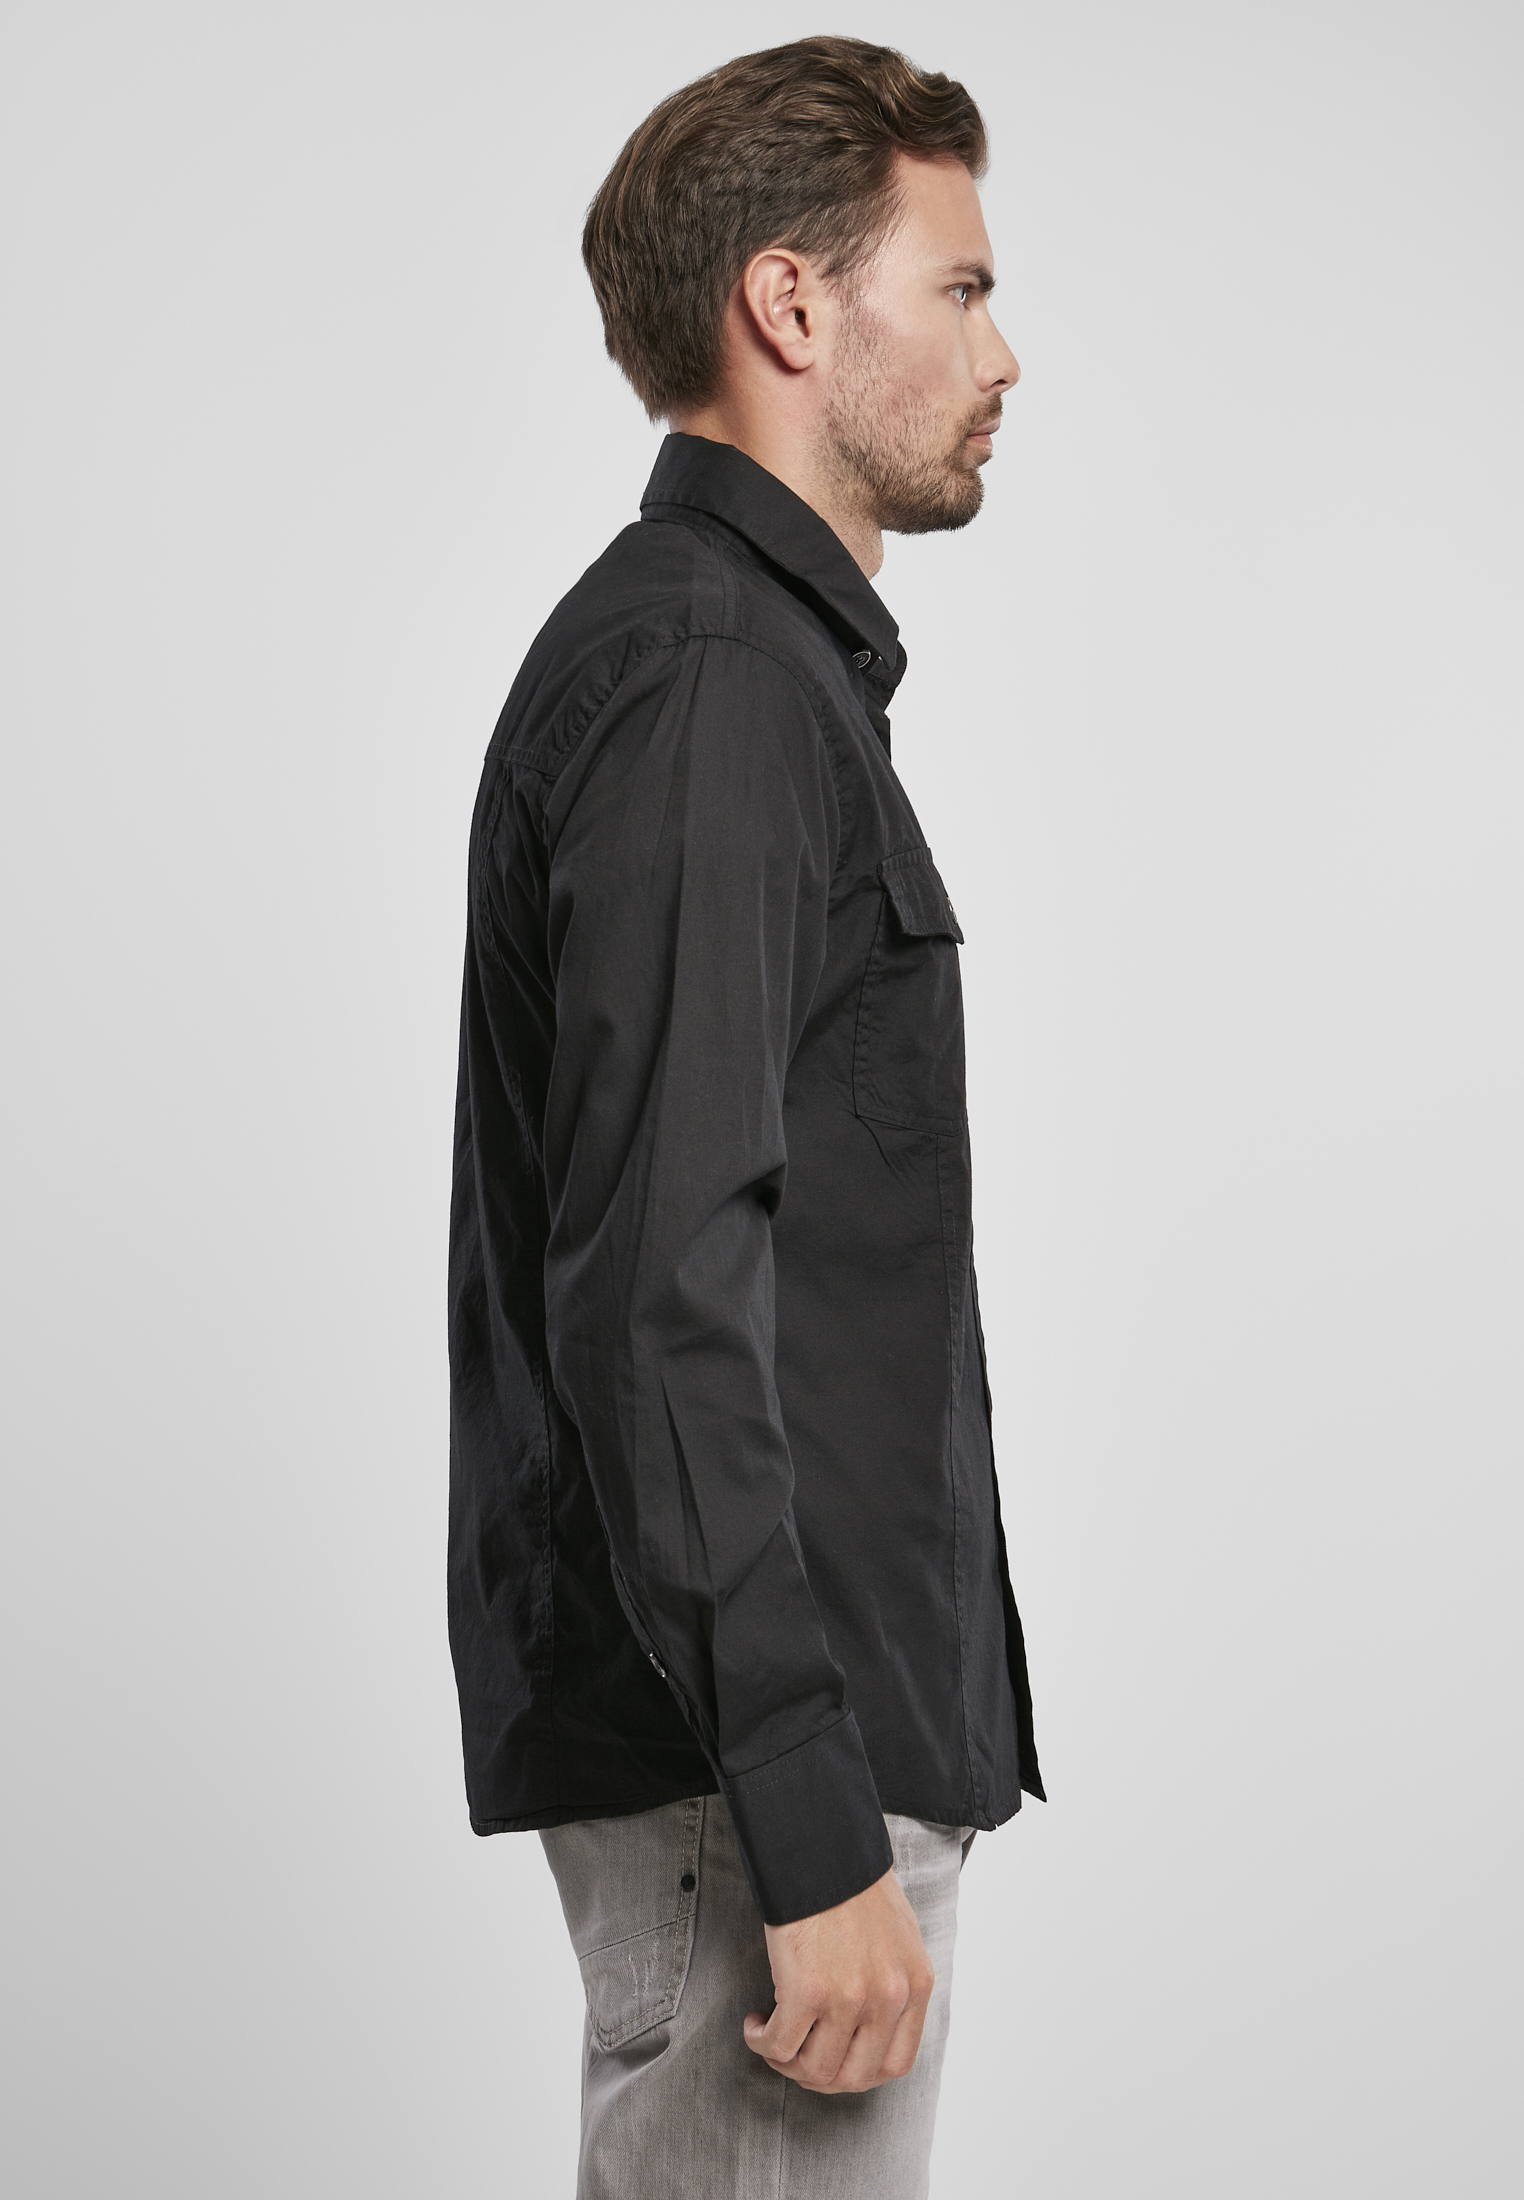 Hemden Slim Worker Shirt in Farbe black